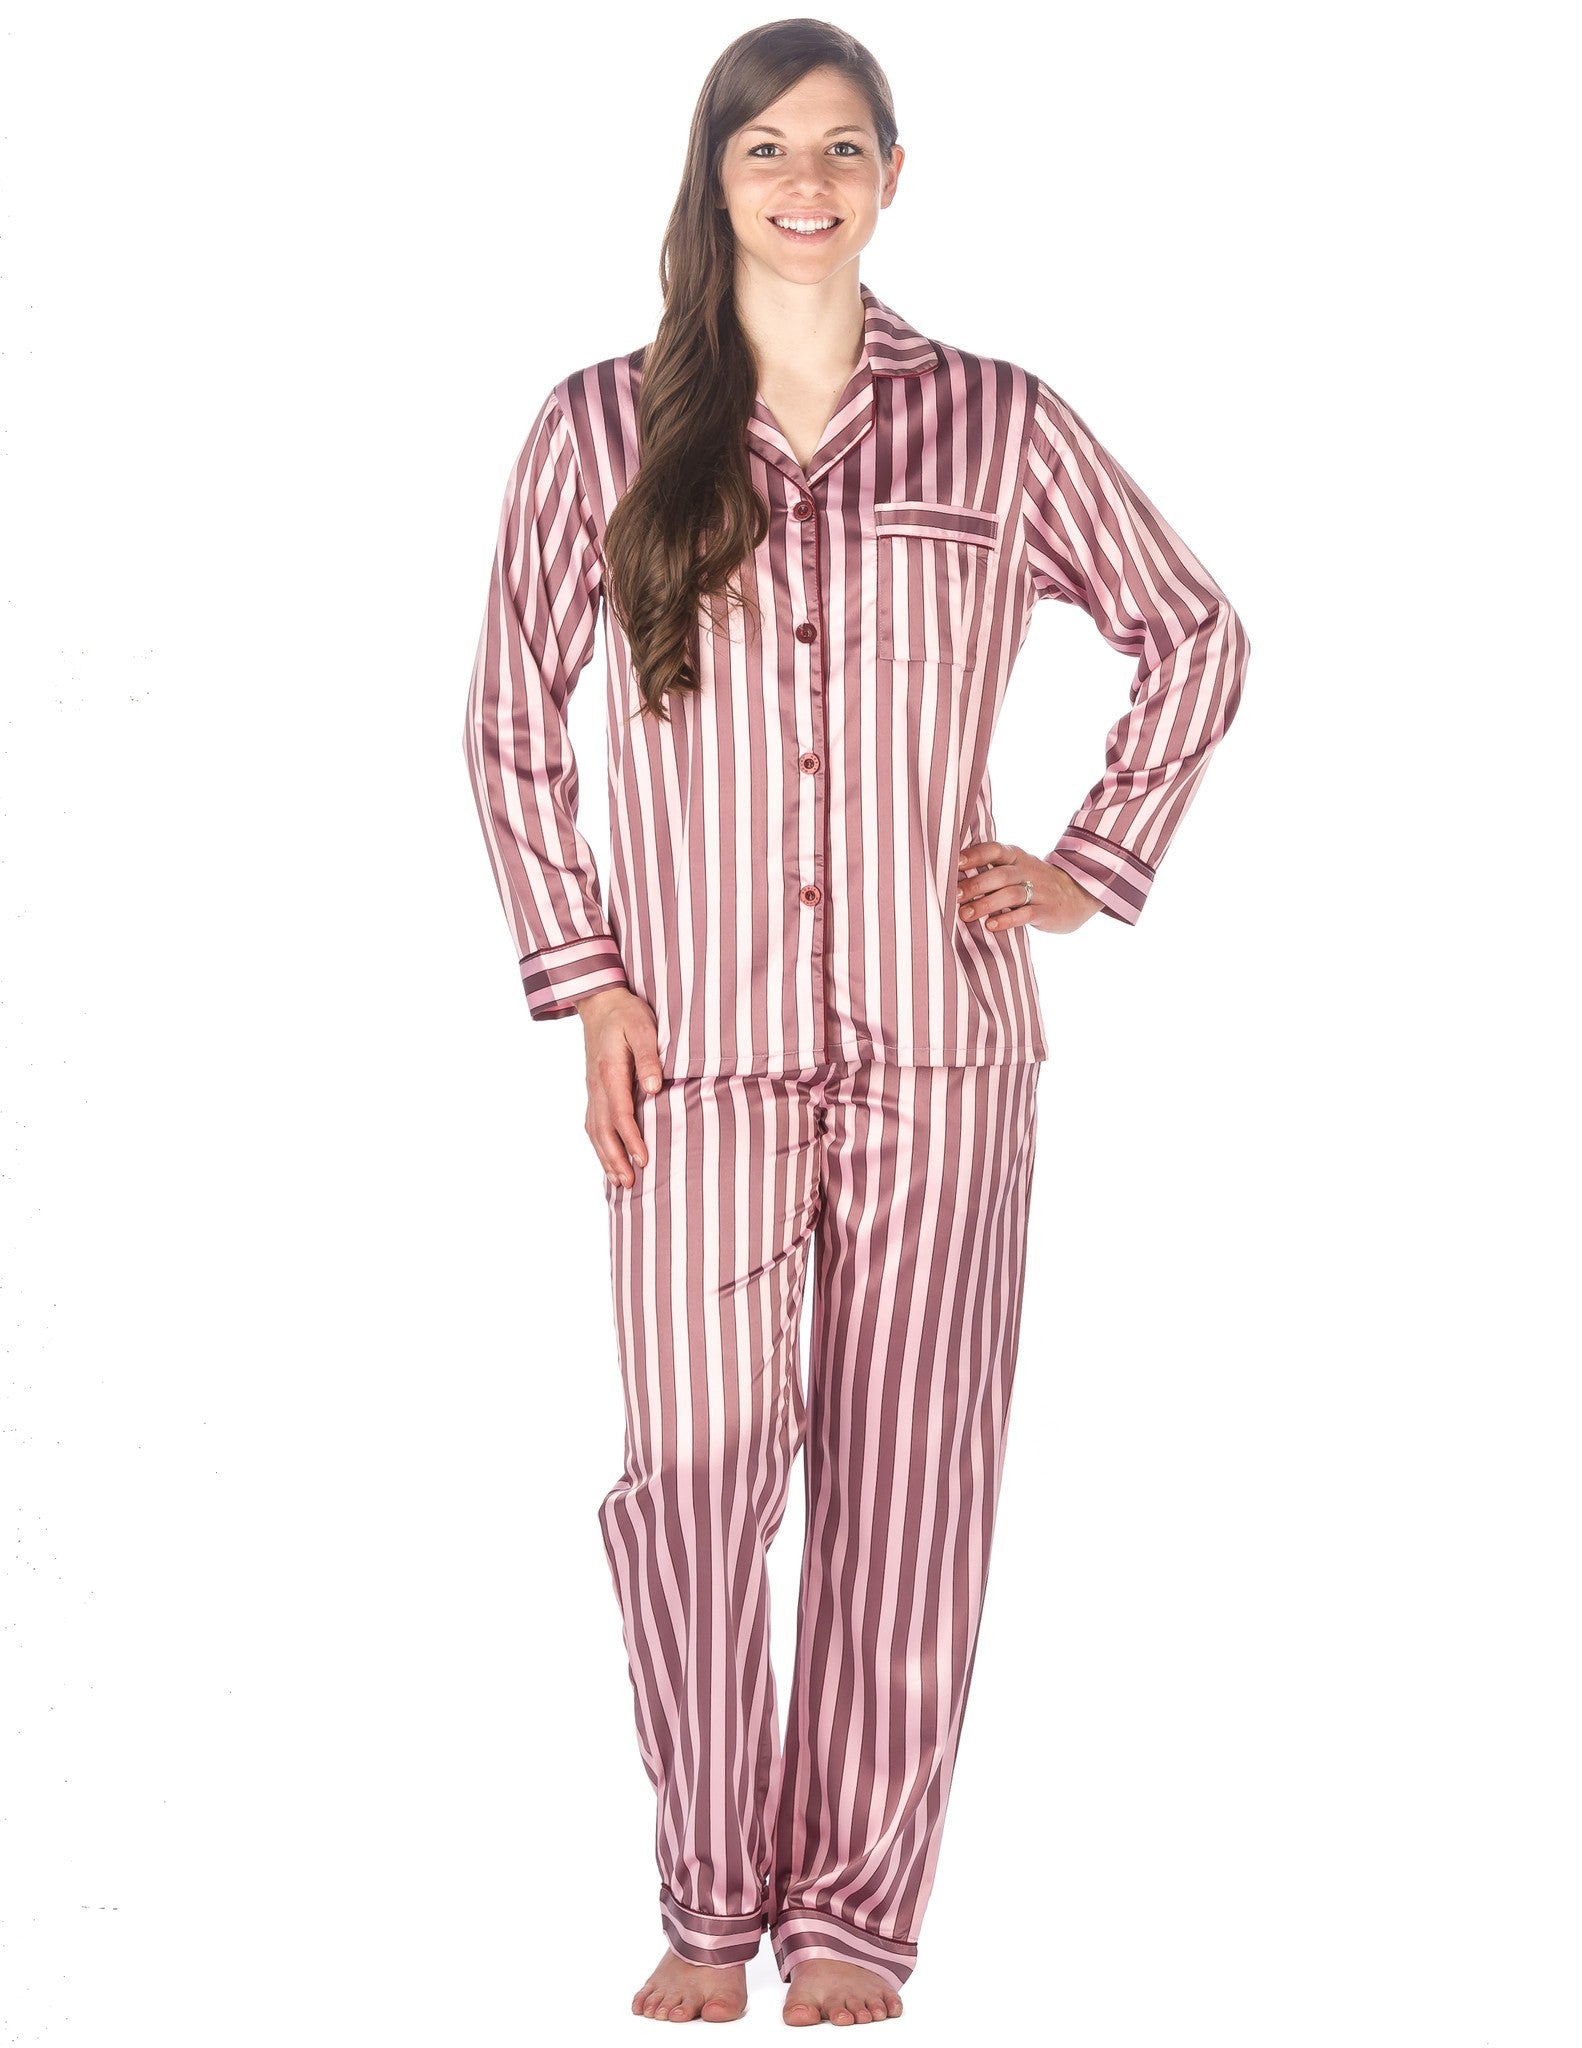 Women's Premium Satin Pajama Sleepwear Set